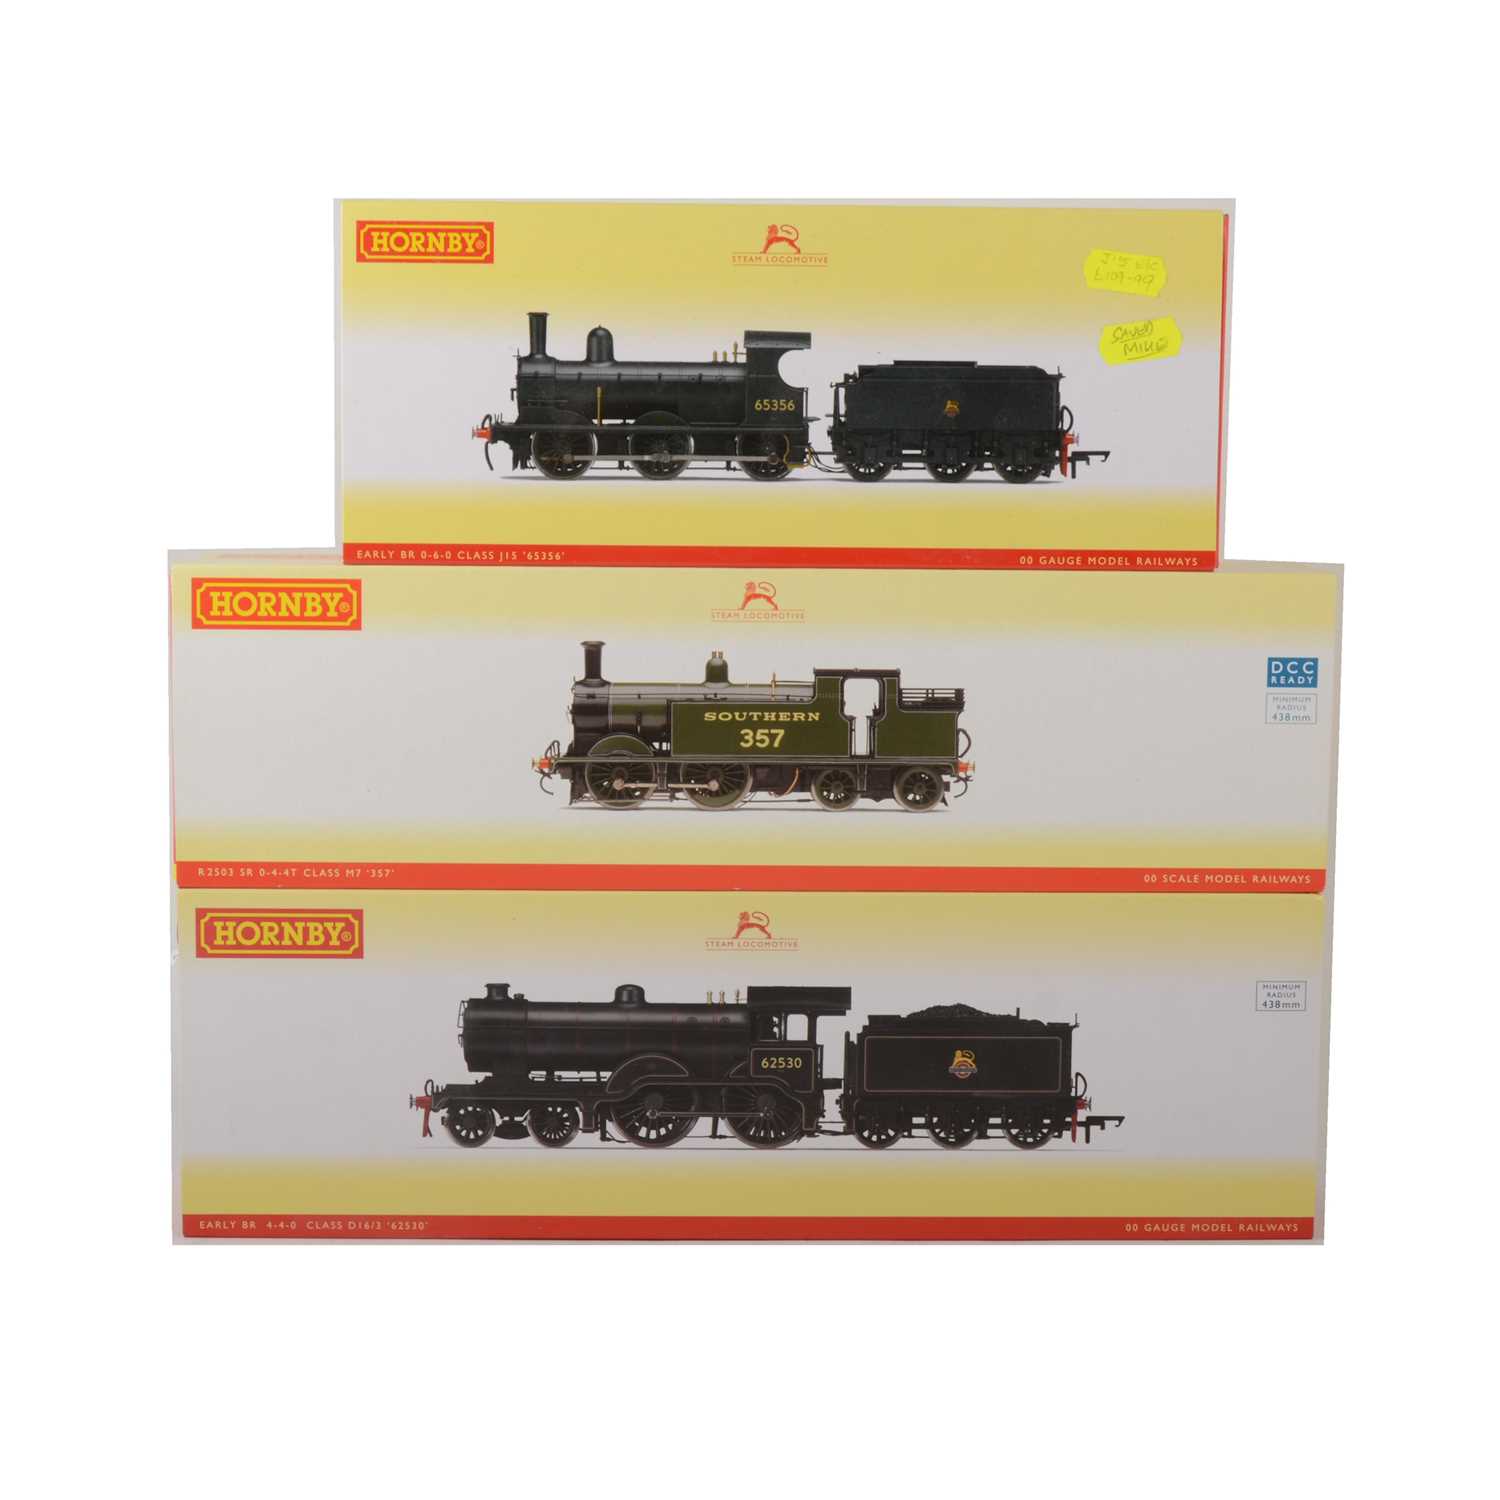 Lot 503 - Three Hornby OO gauge model railway locomotives: R3234, R3231, R2503